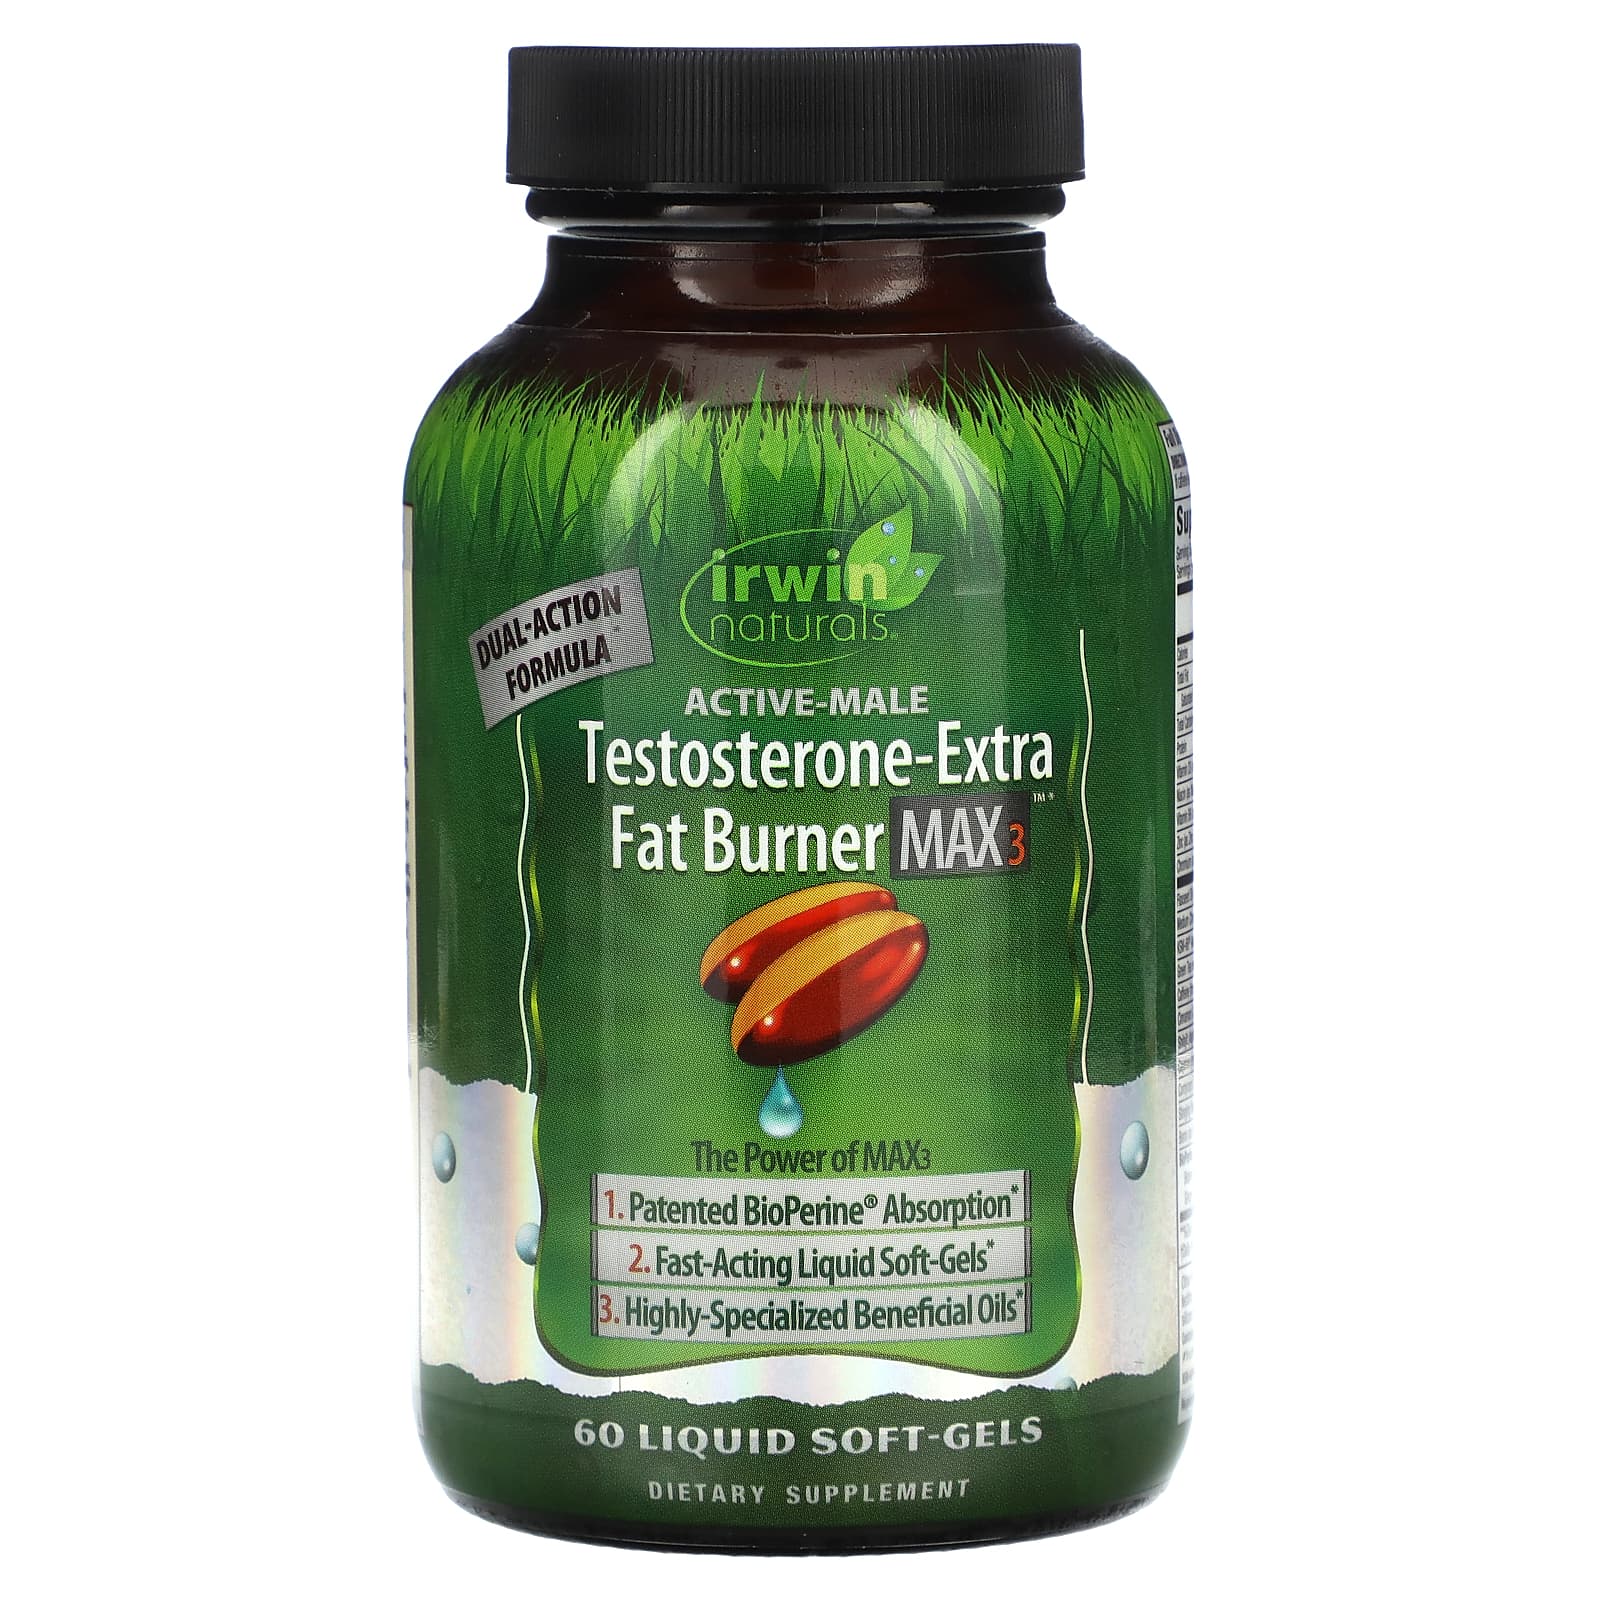 Irwin Naturals Active-Male Testosterone-Extra Fat Burner MAX 3 60 мягких таблеток